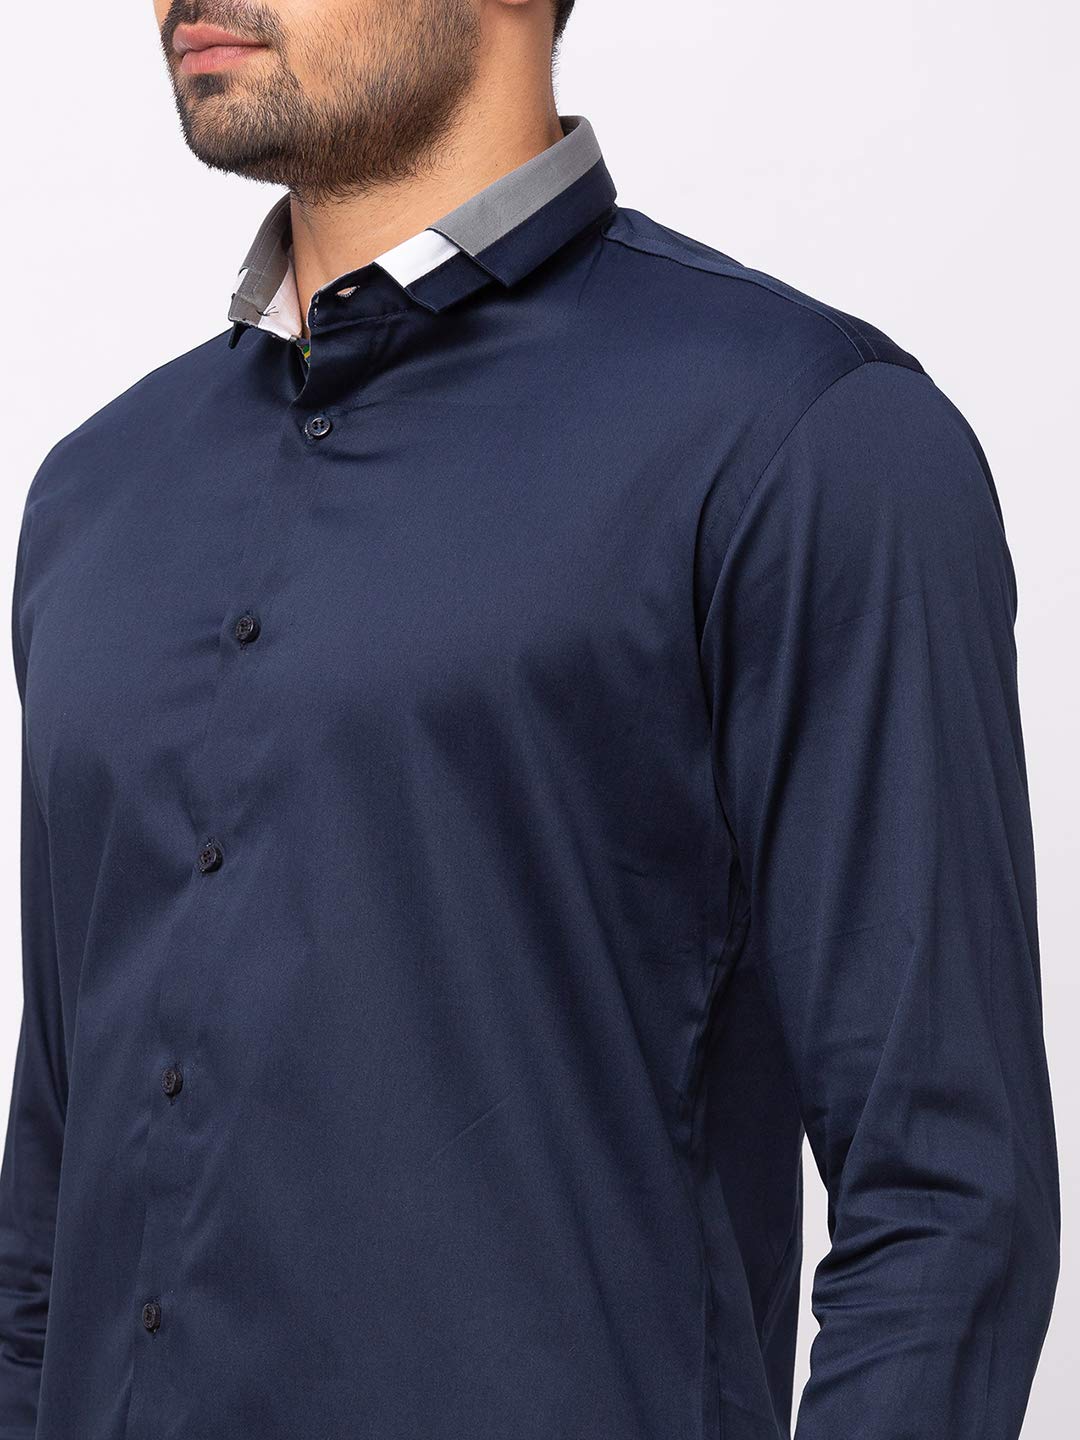 Navy Blue Twin Collar Casual Shirt